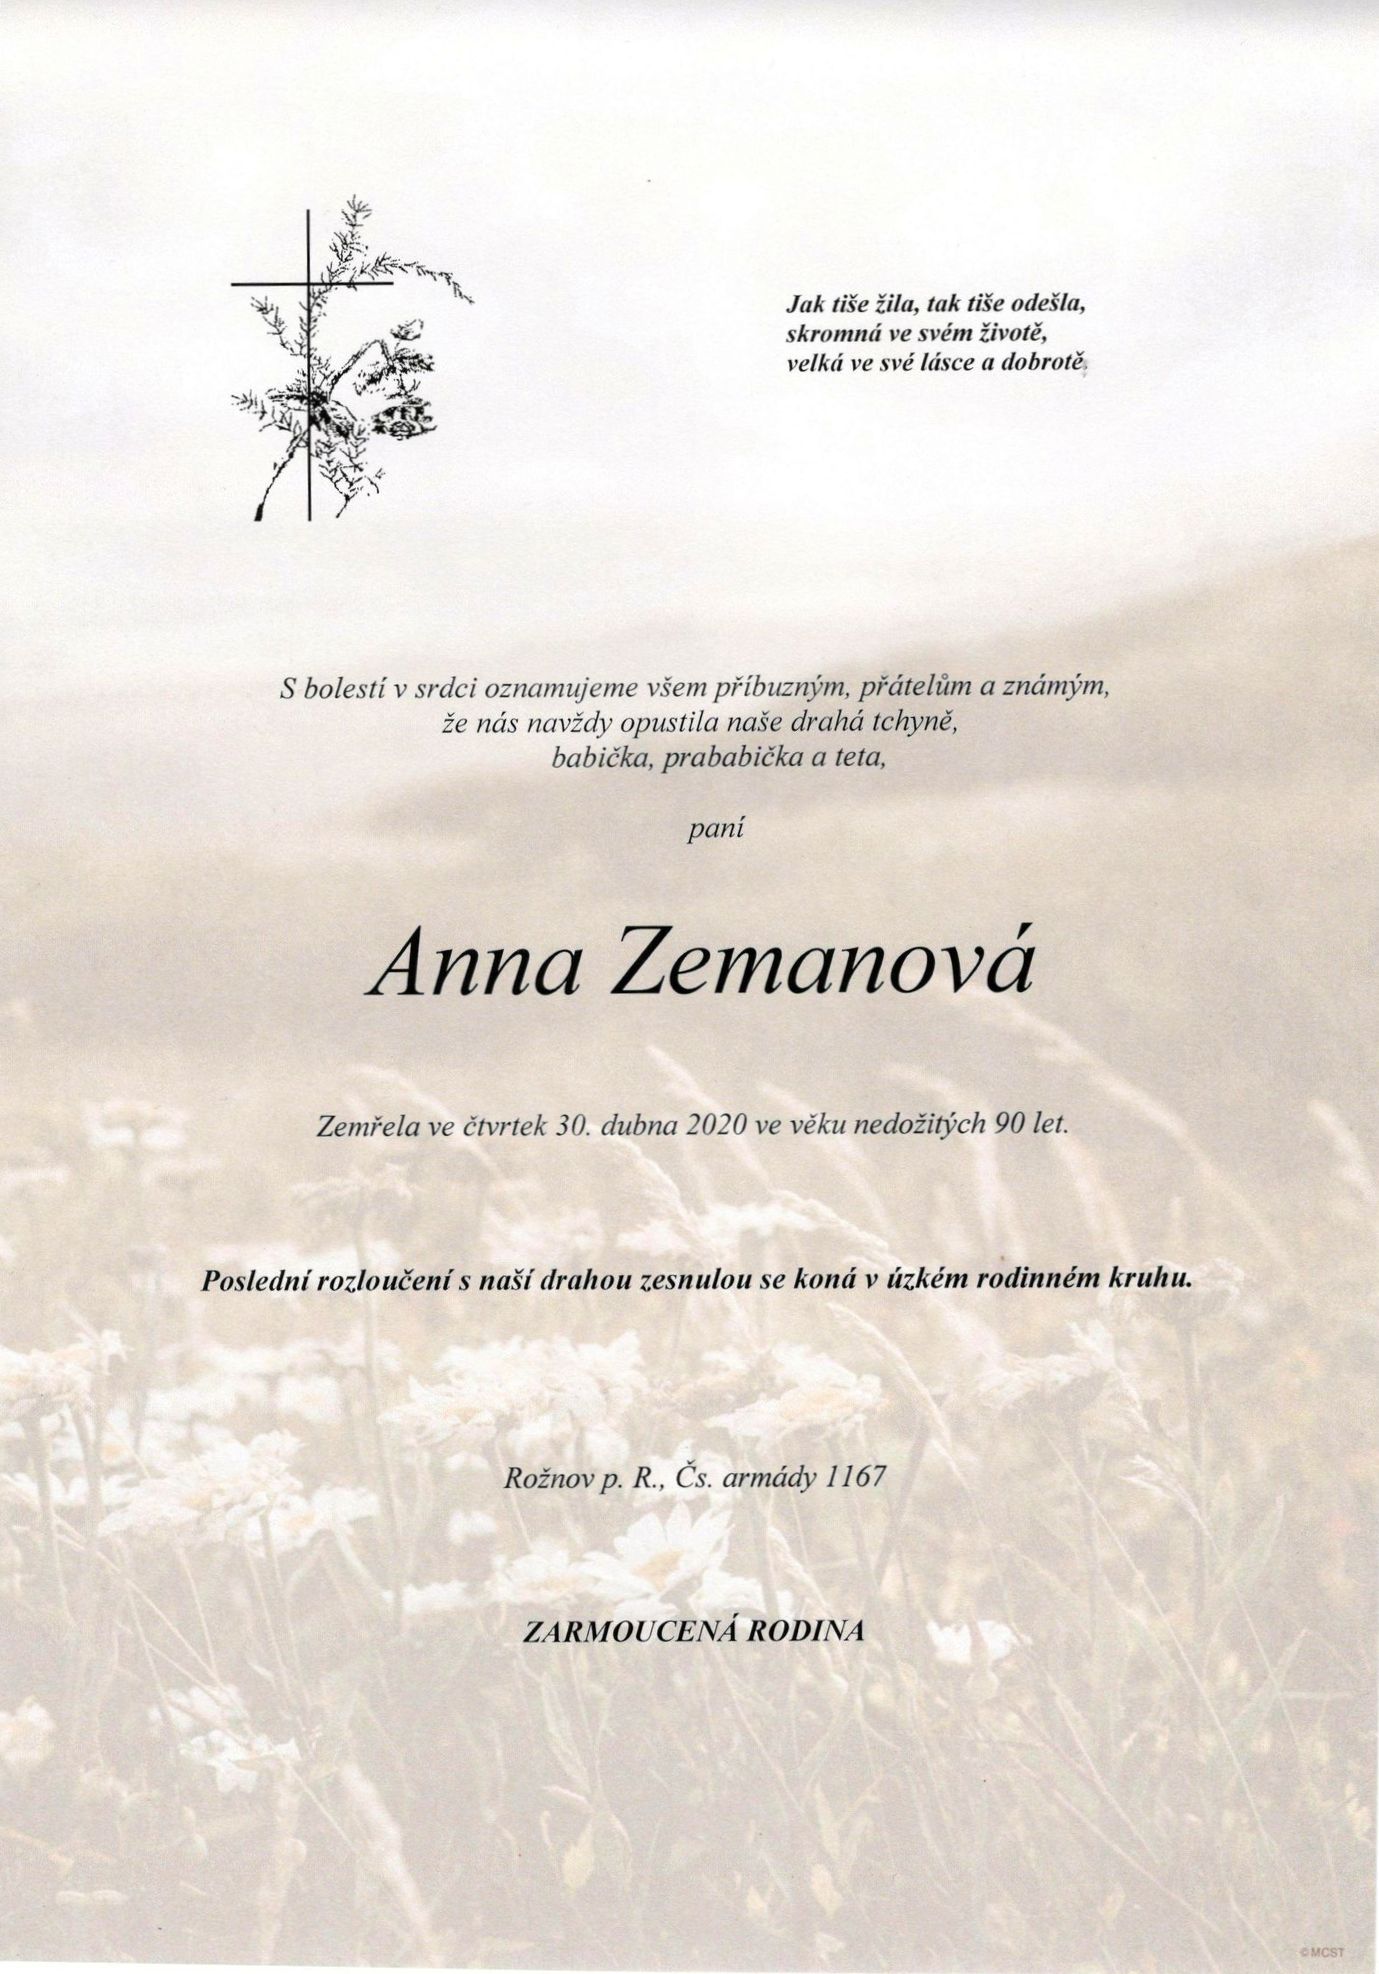 Anna Zemanová